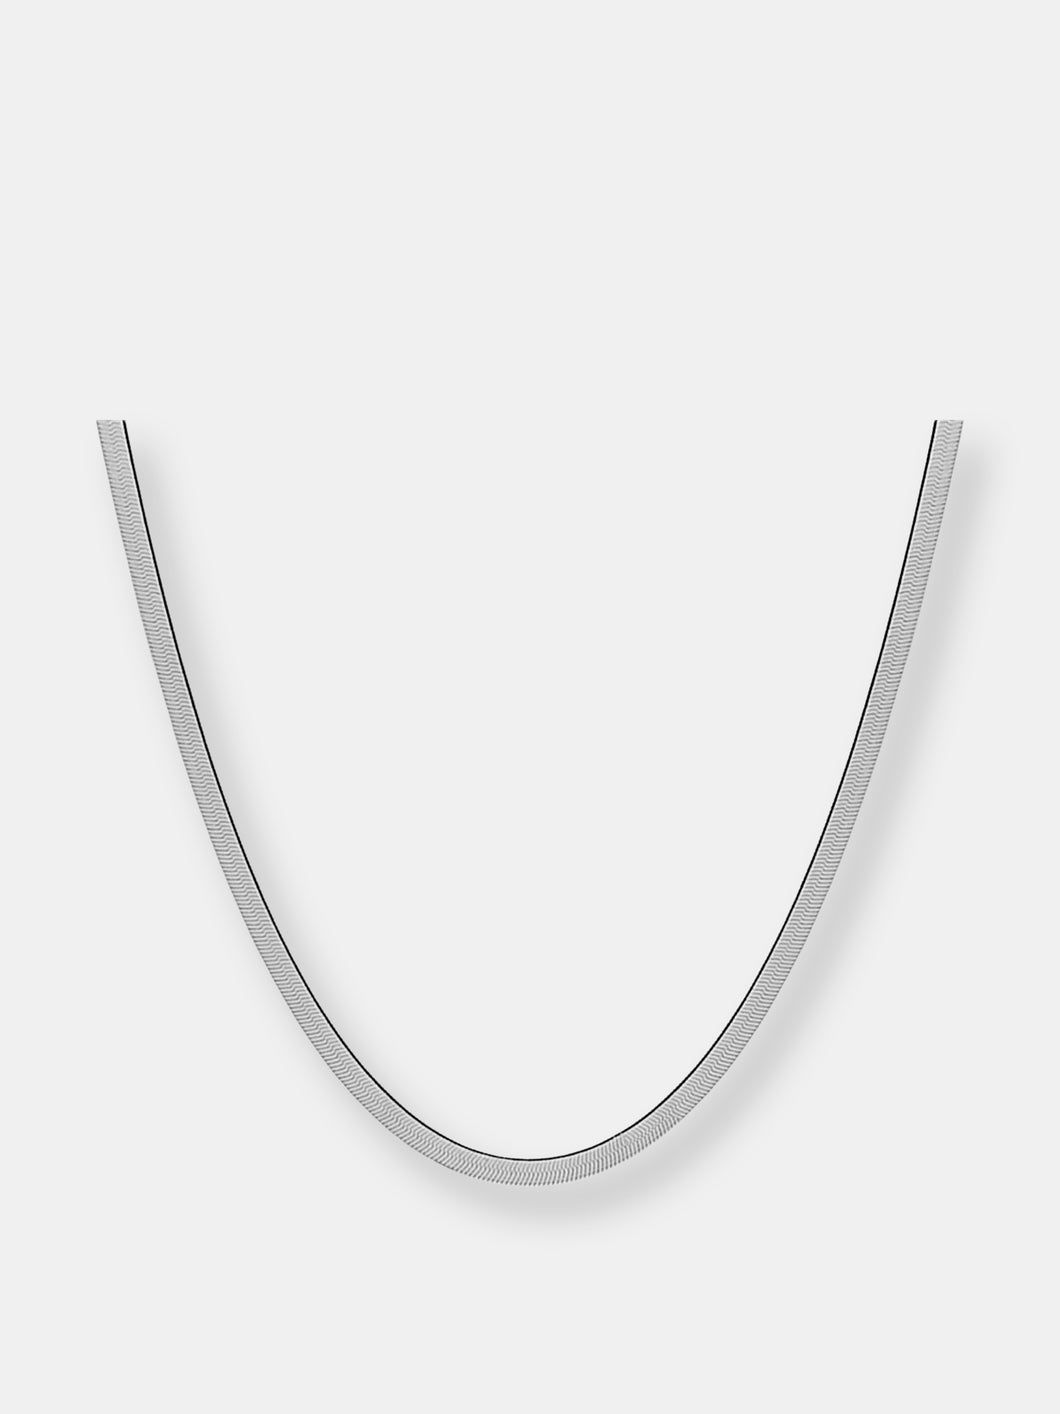 Silver Herringbone Chain Necklace